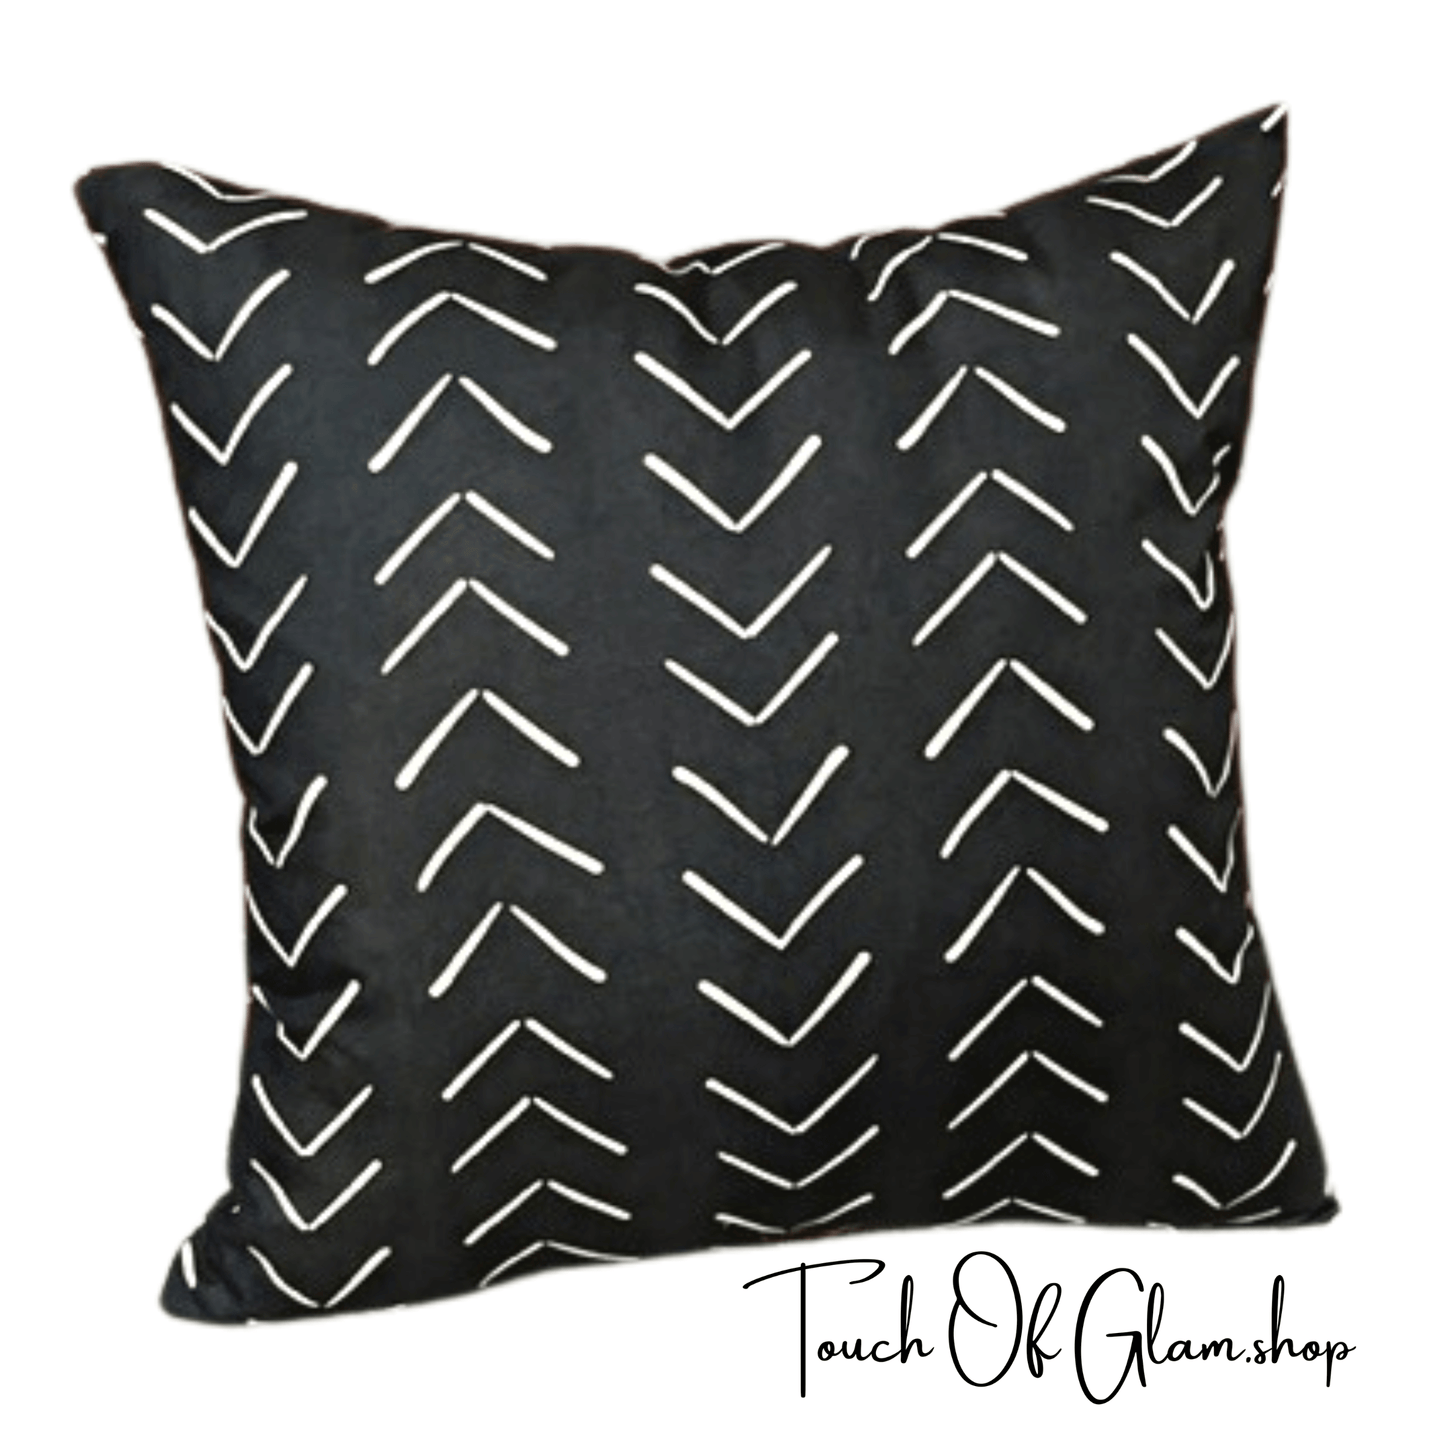 Wholesale Throw Pillow Cover: Black Southwest, Tribal Pillow